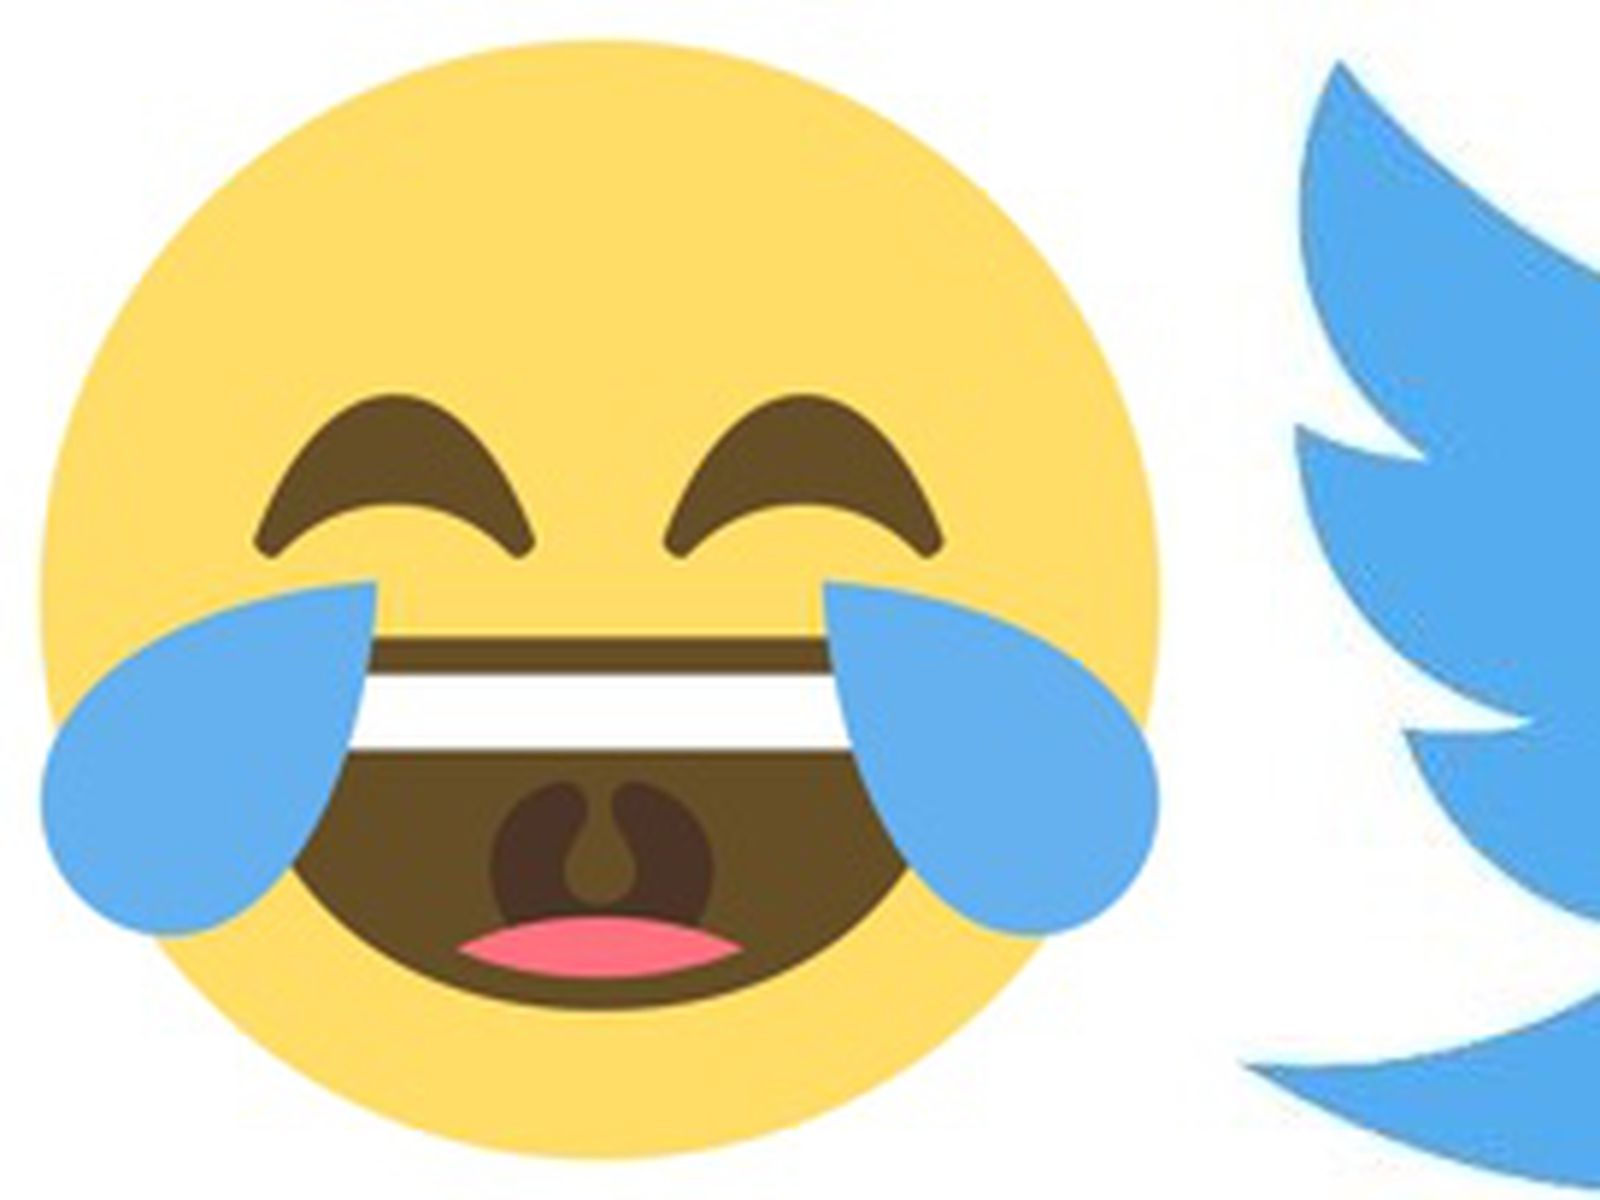 twitter emoji indirects